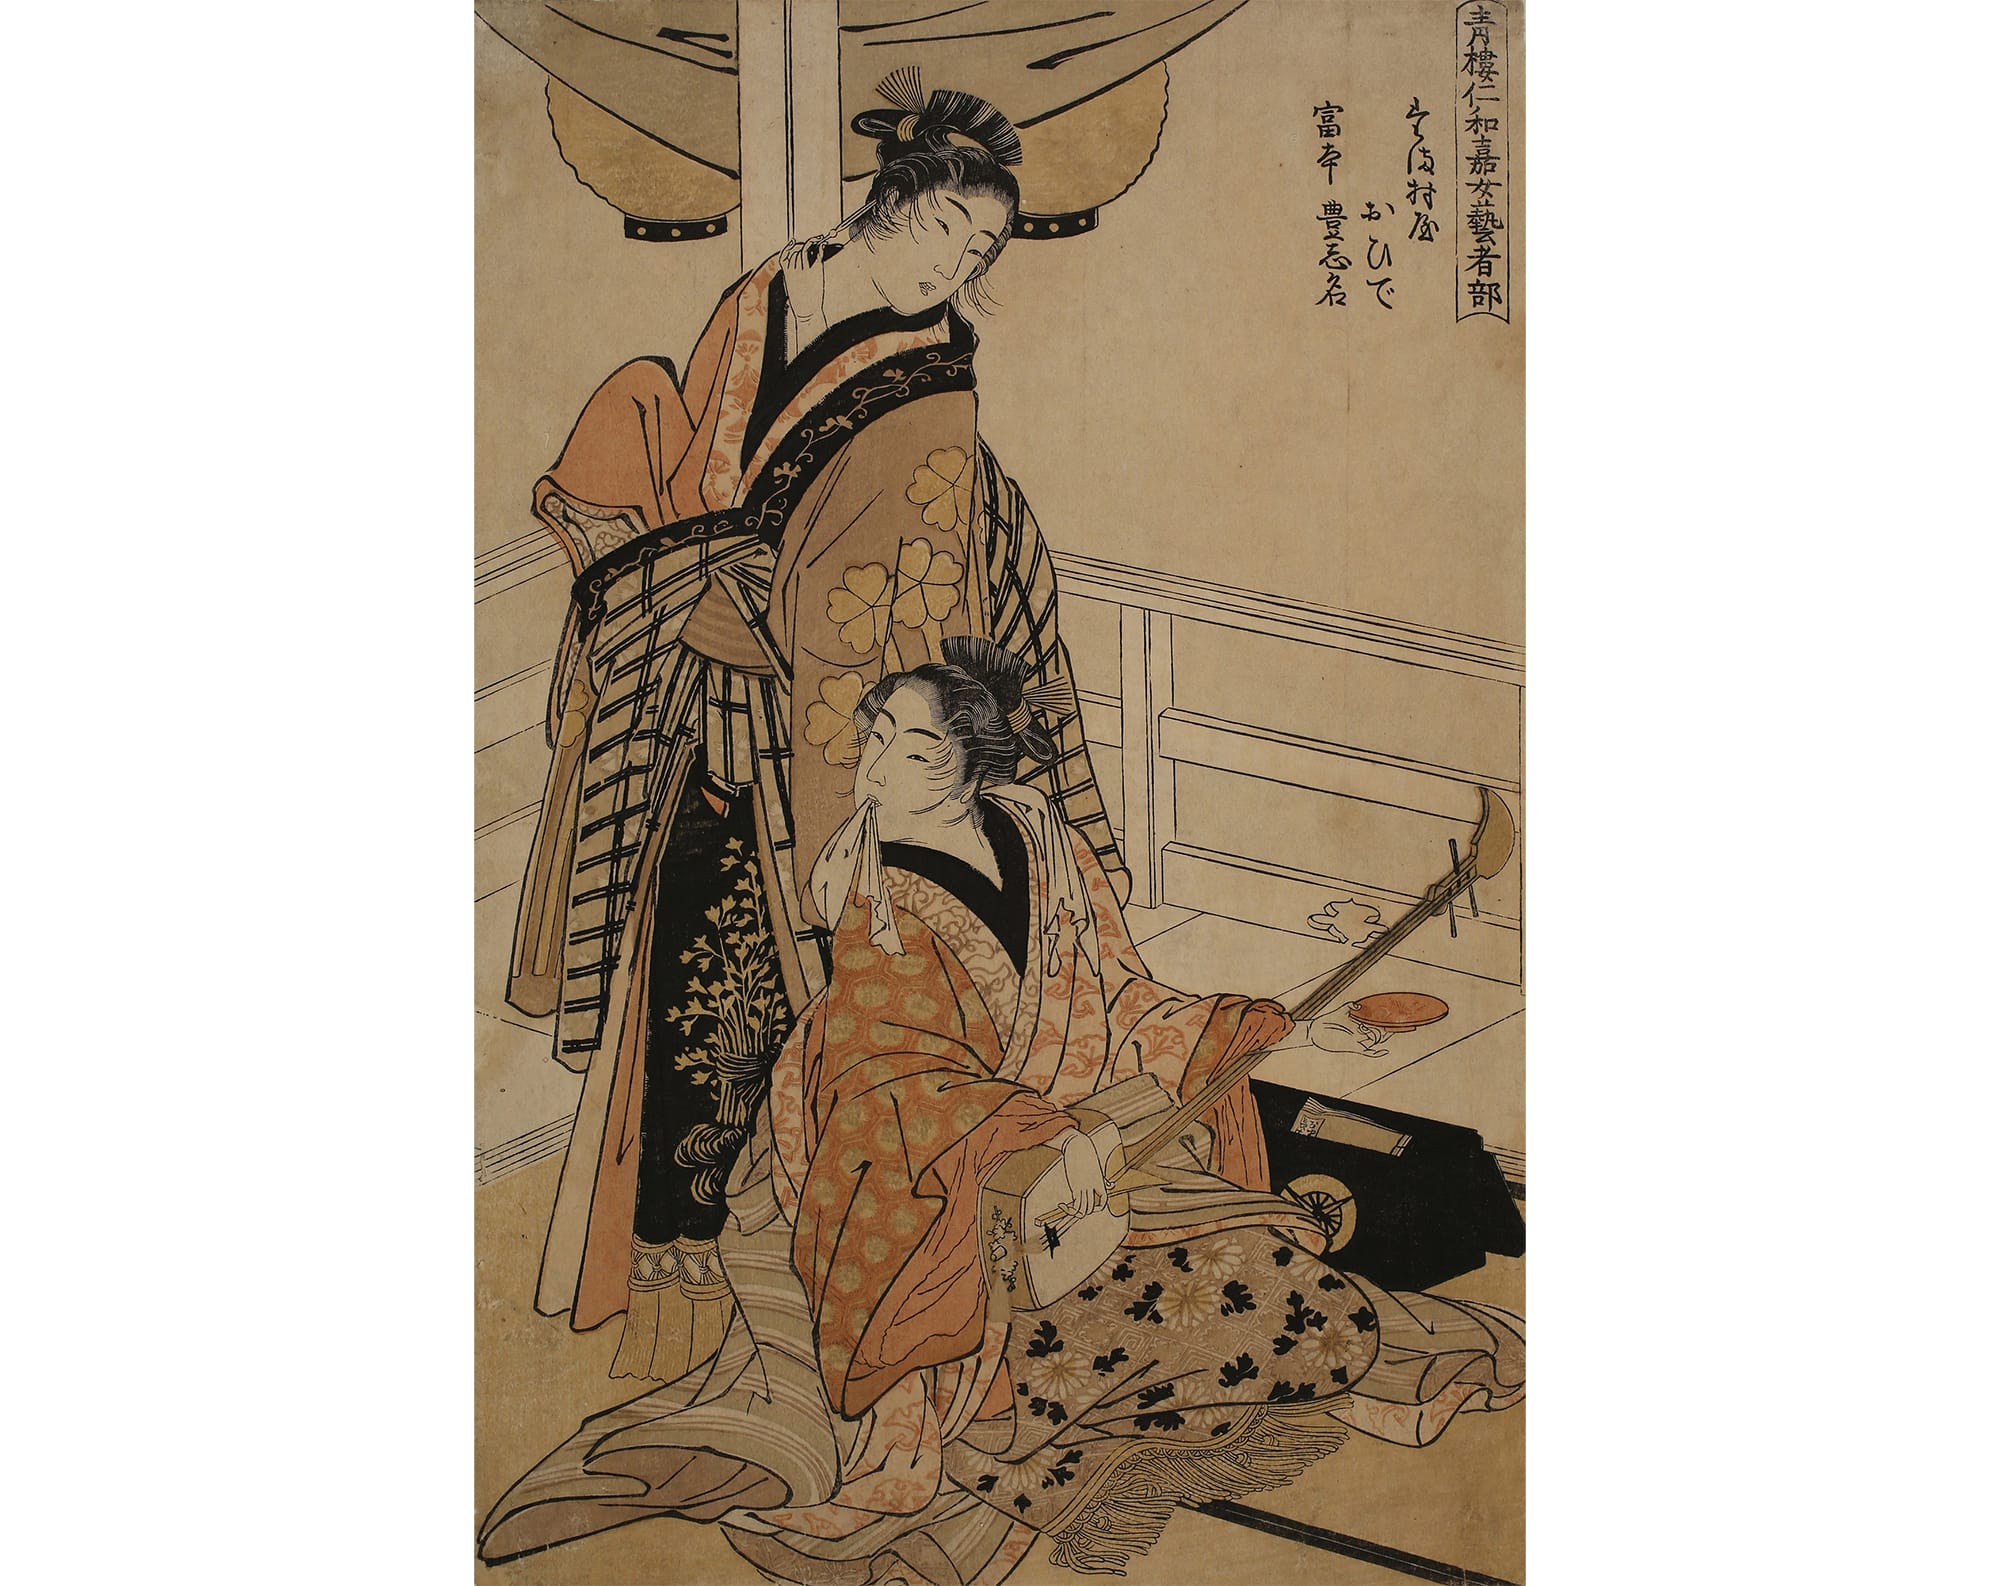 Kitagawa Utamaro, Seironiwakaonnageishanobu Tamamurayaohide Tomimototoyoshina, Oban, Nishiki-e, 3rd year of the Tenmei Era (1783), Japan Ukiyo-e Museum. The yujo (prostitute) and geisha (performing artists) were admired by the common people as fashion leaders and were often portrayed in bijin-ga.